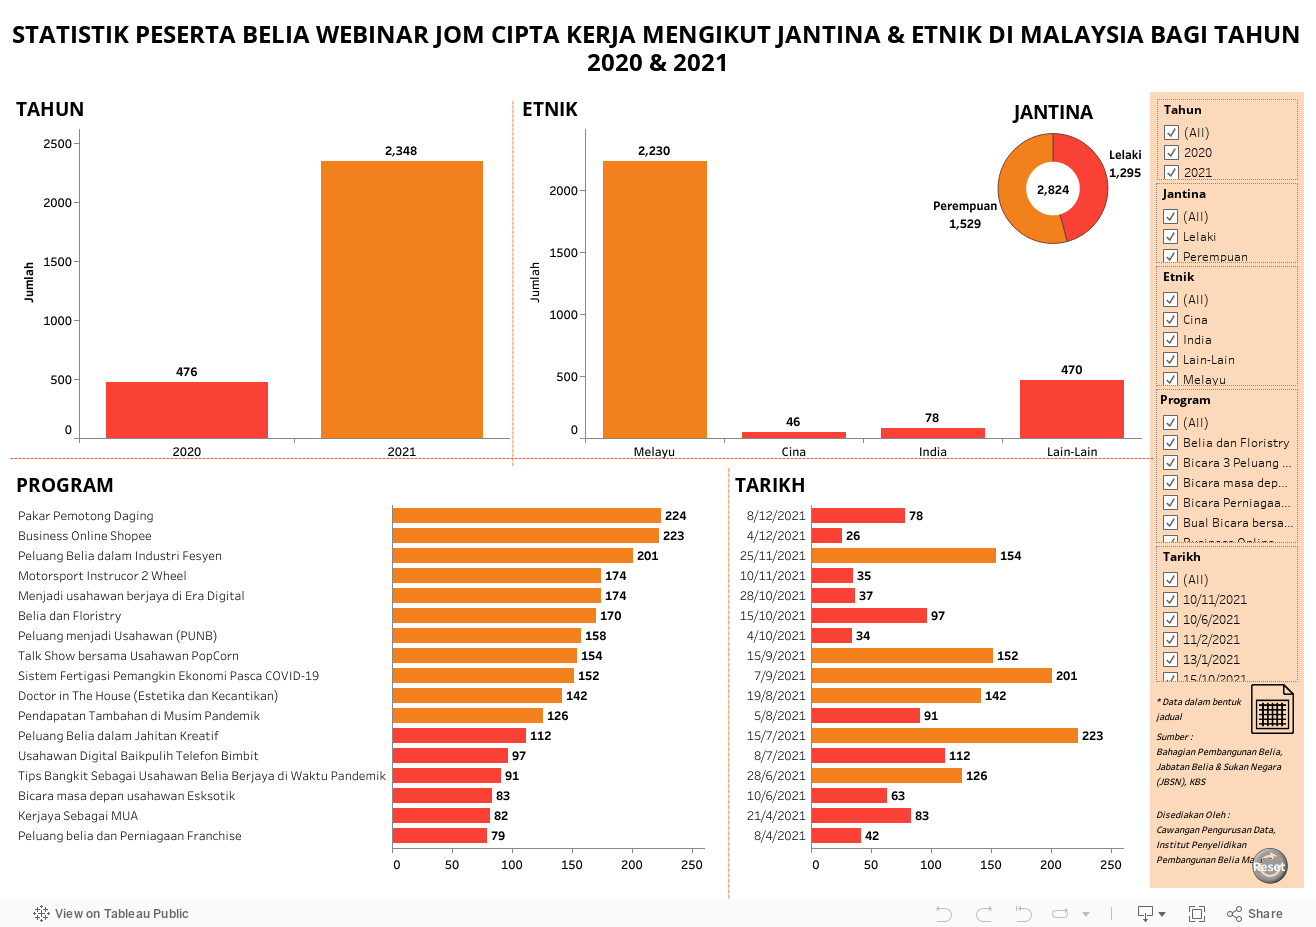 STATISTIK PESERTA BELIA WEBINAR JOM CIPTA KERJA MENGIKUT JANTINA & ETNIK DI MALAYSIA BAGI TAHUN 2020 & 2021 